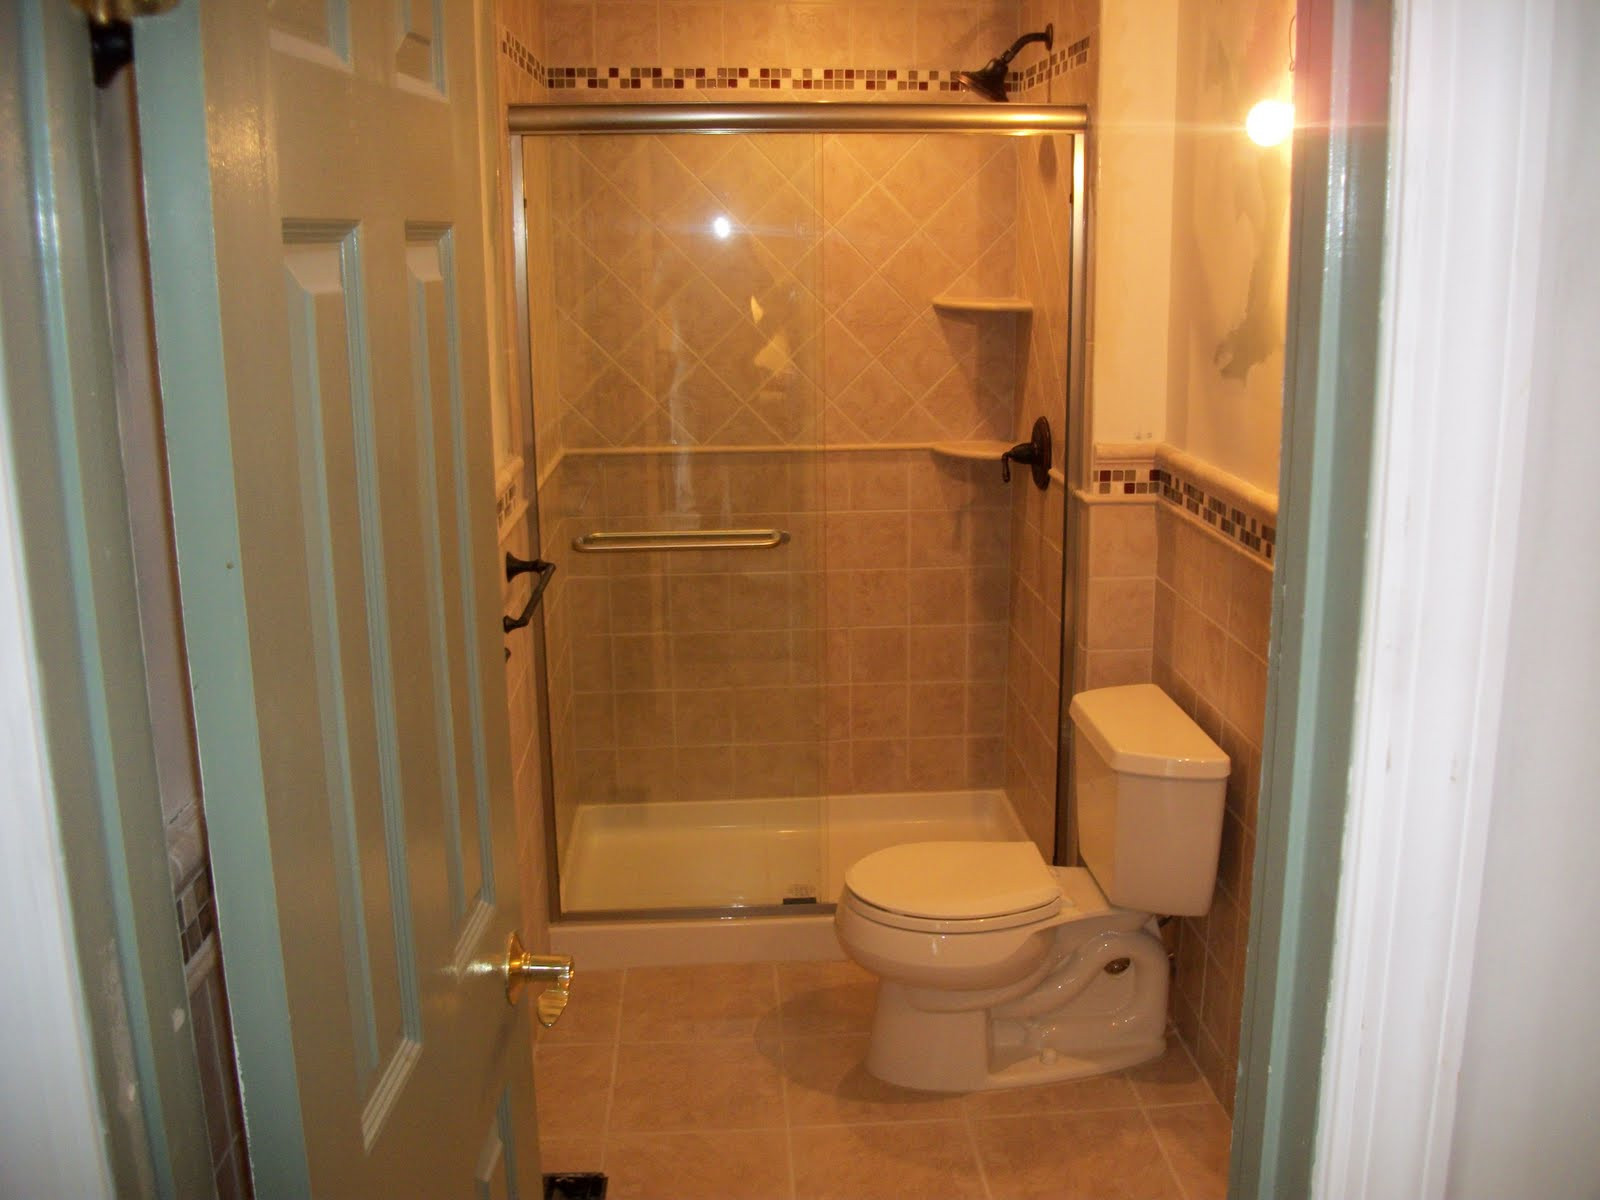 Bathroom Shower Tile Ideas
 Slate Tile Bathroom Shower Design Ideas